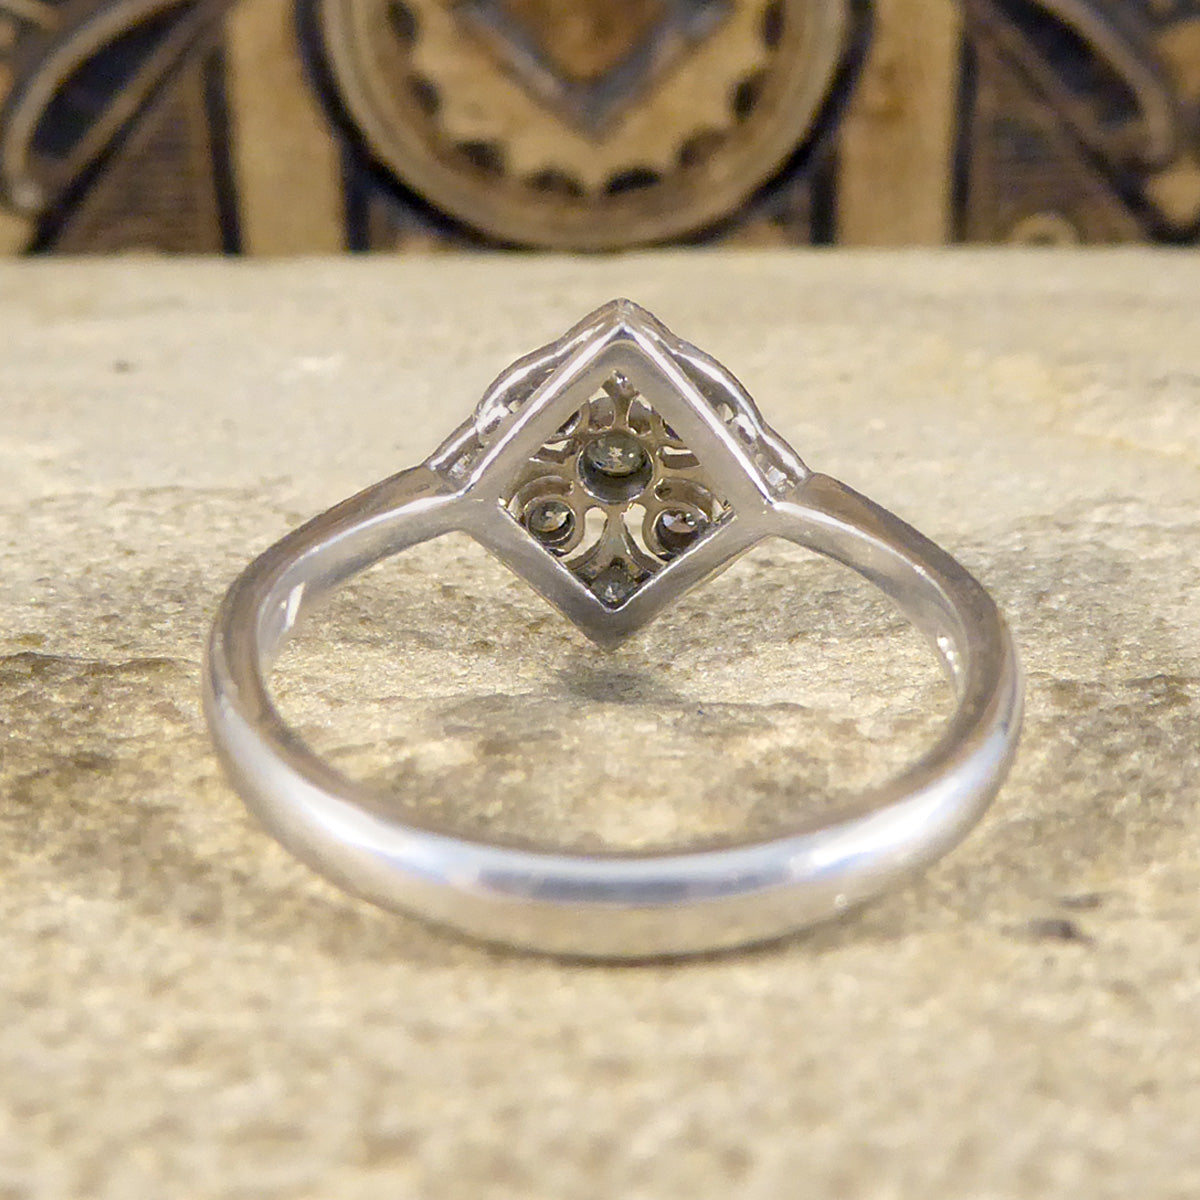 1920's Period Replica Geometric Pattern Diamond Ring in 18ct White Gold